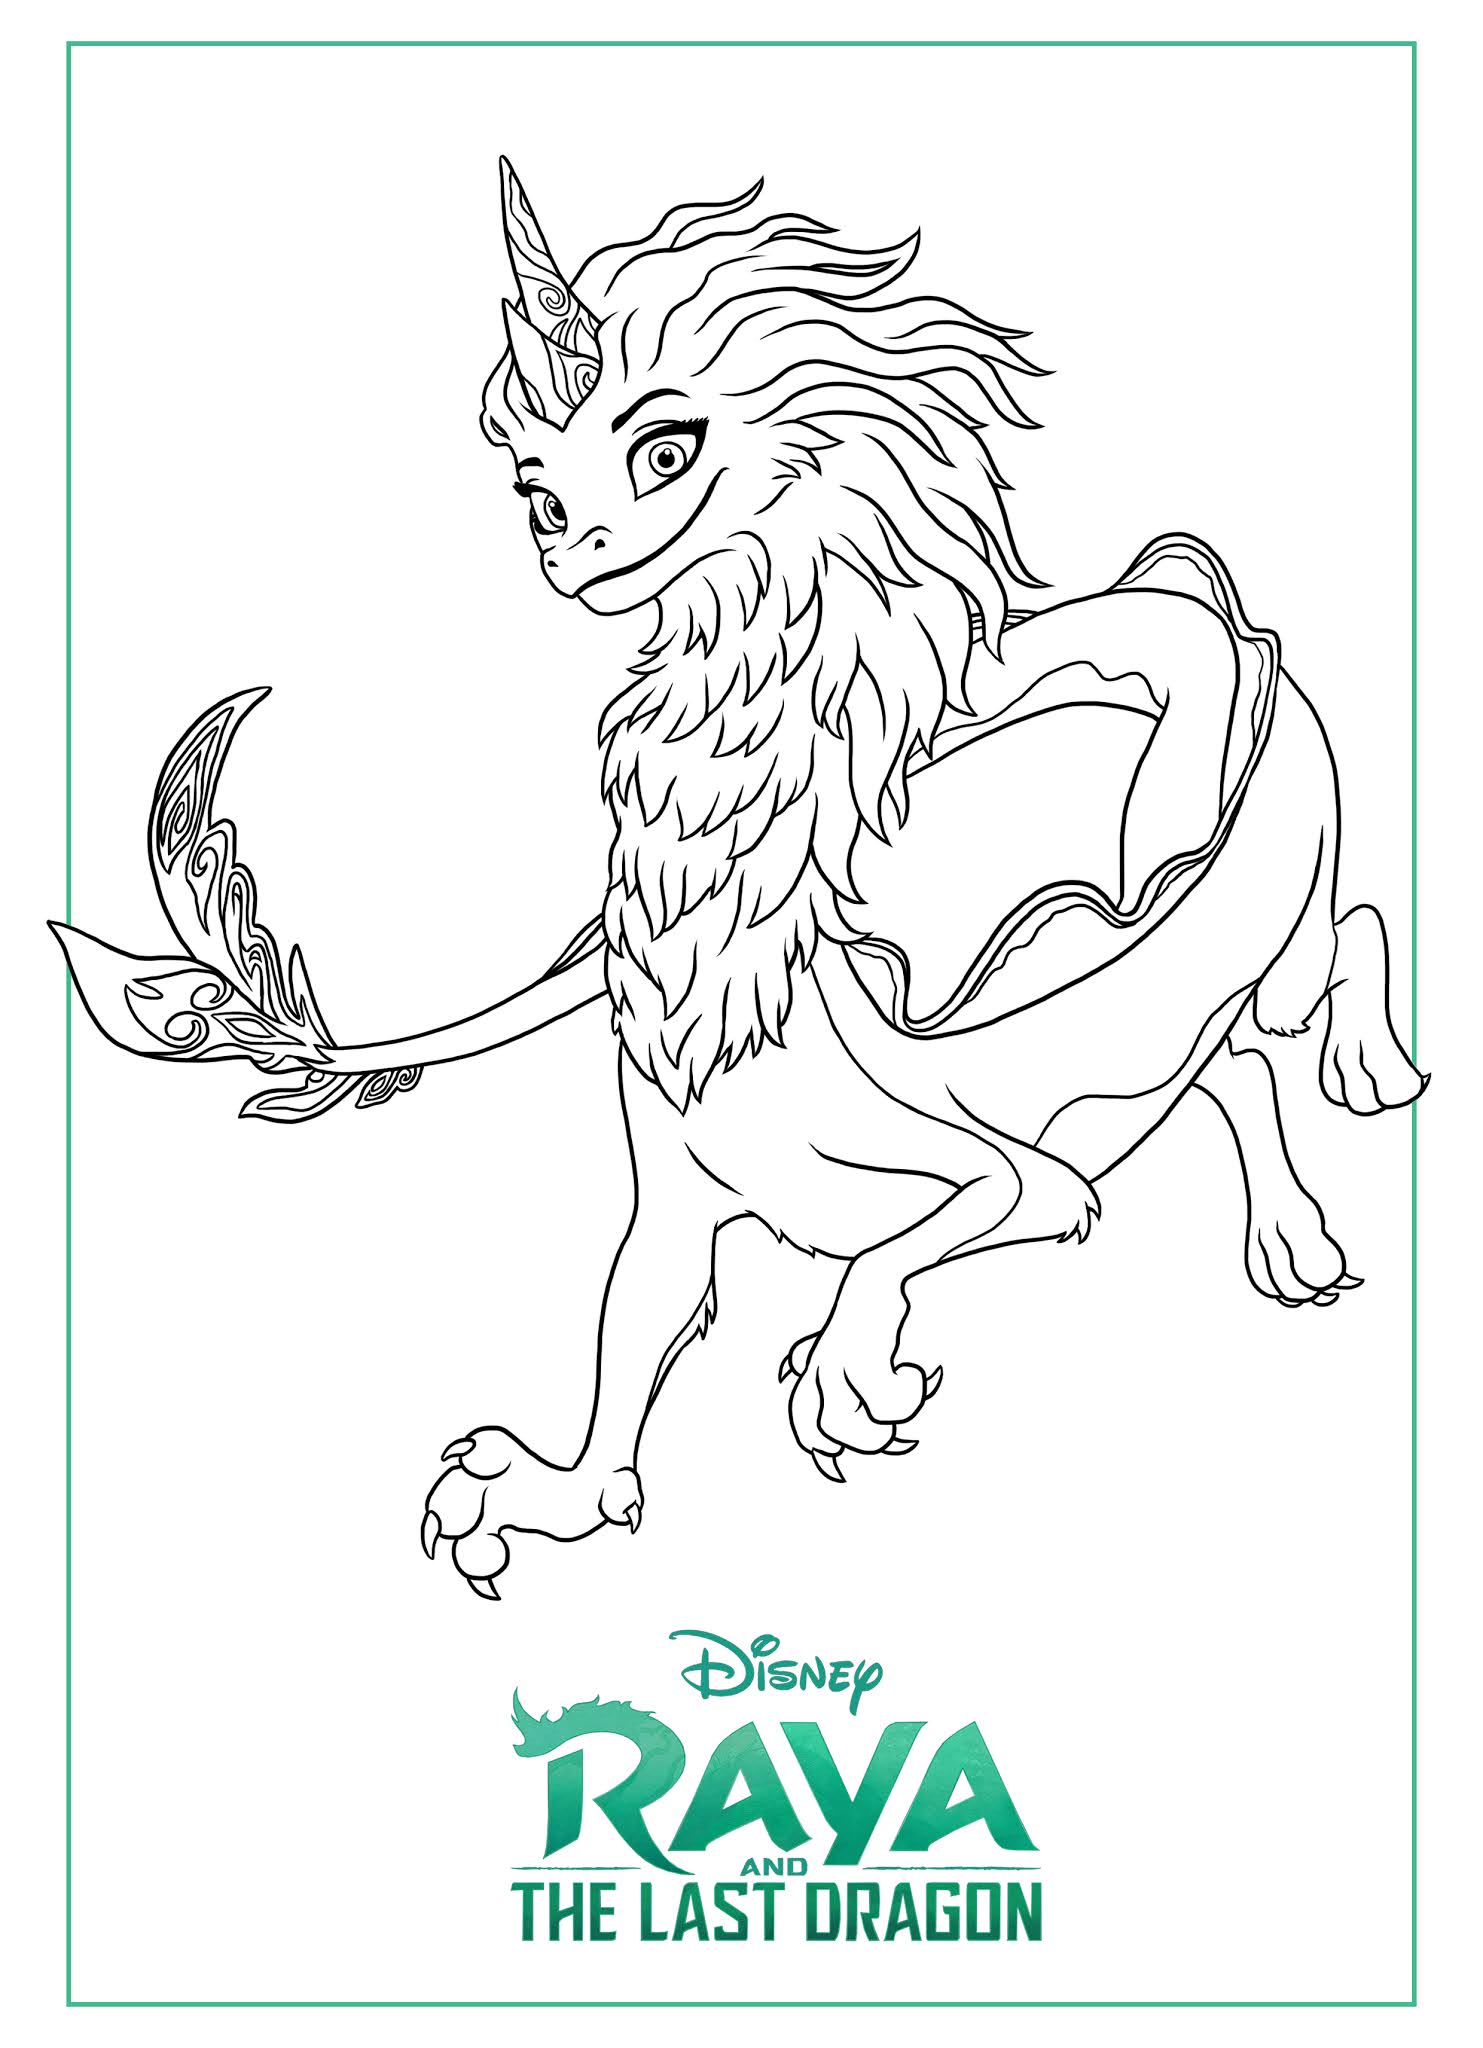 Carefree Coloring: Raya and the Last Dragon: Sisu coloring page